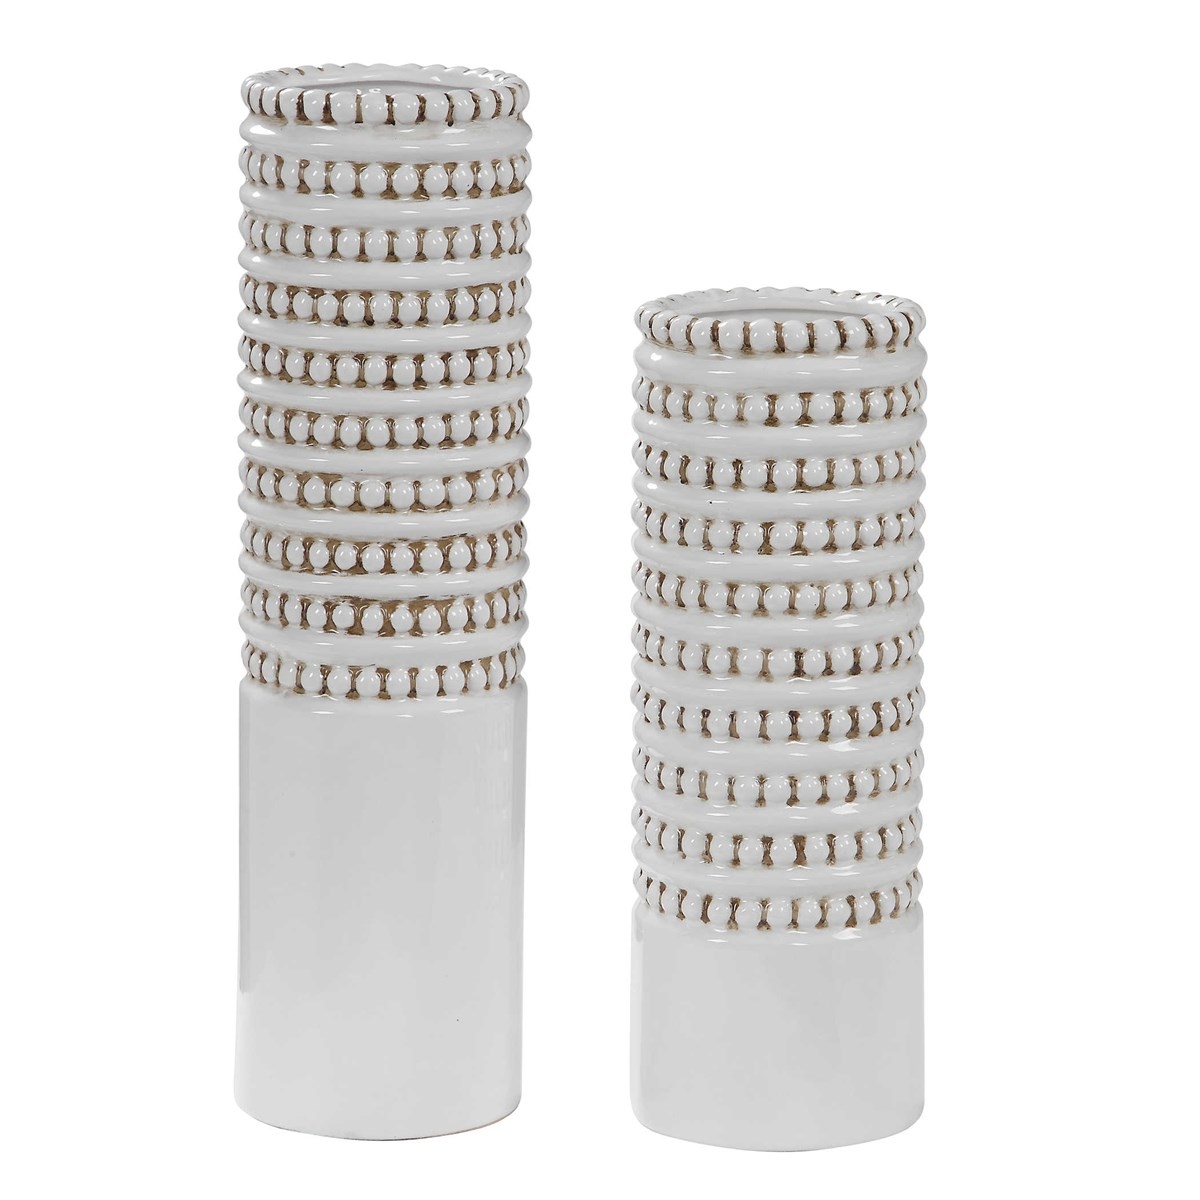 Angelou White Vases, Set of 2 - Image 0